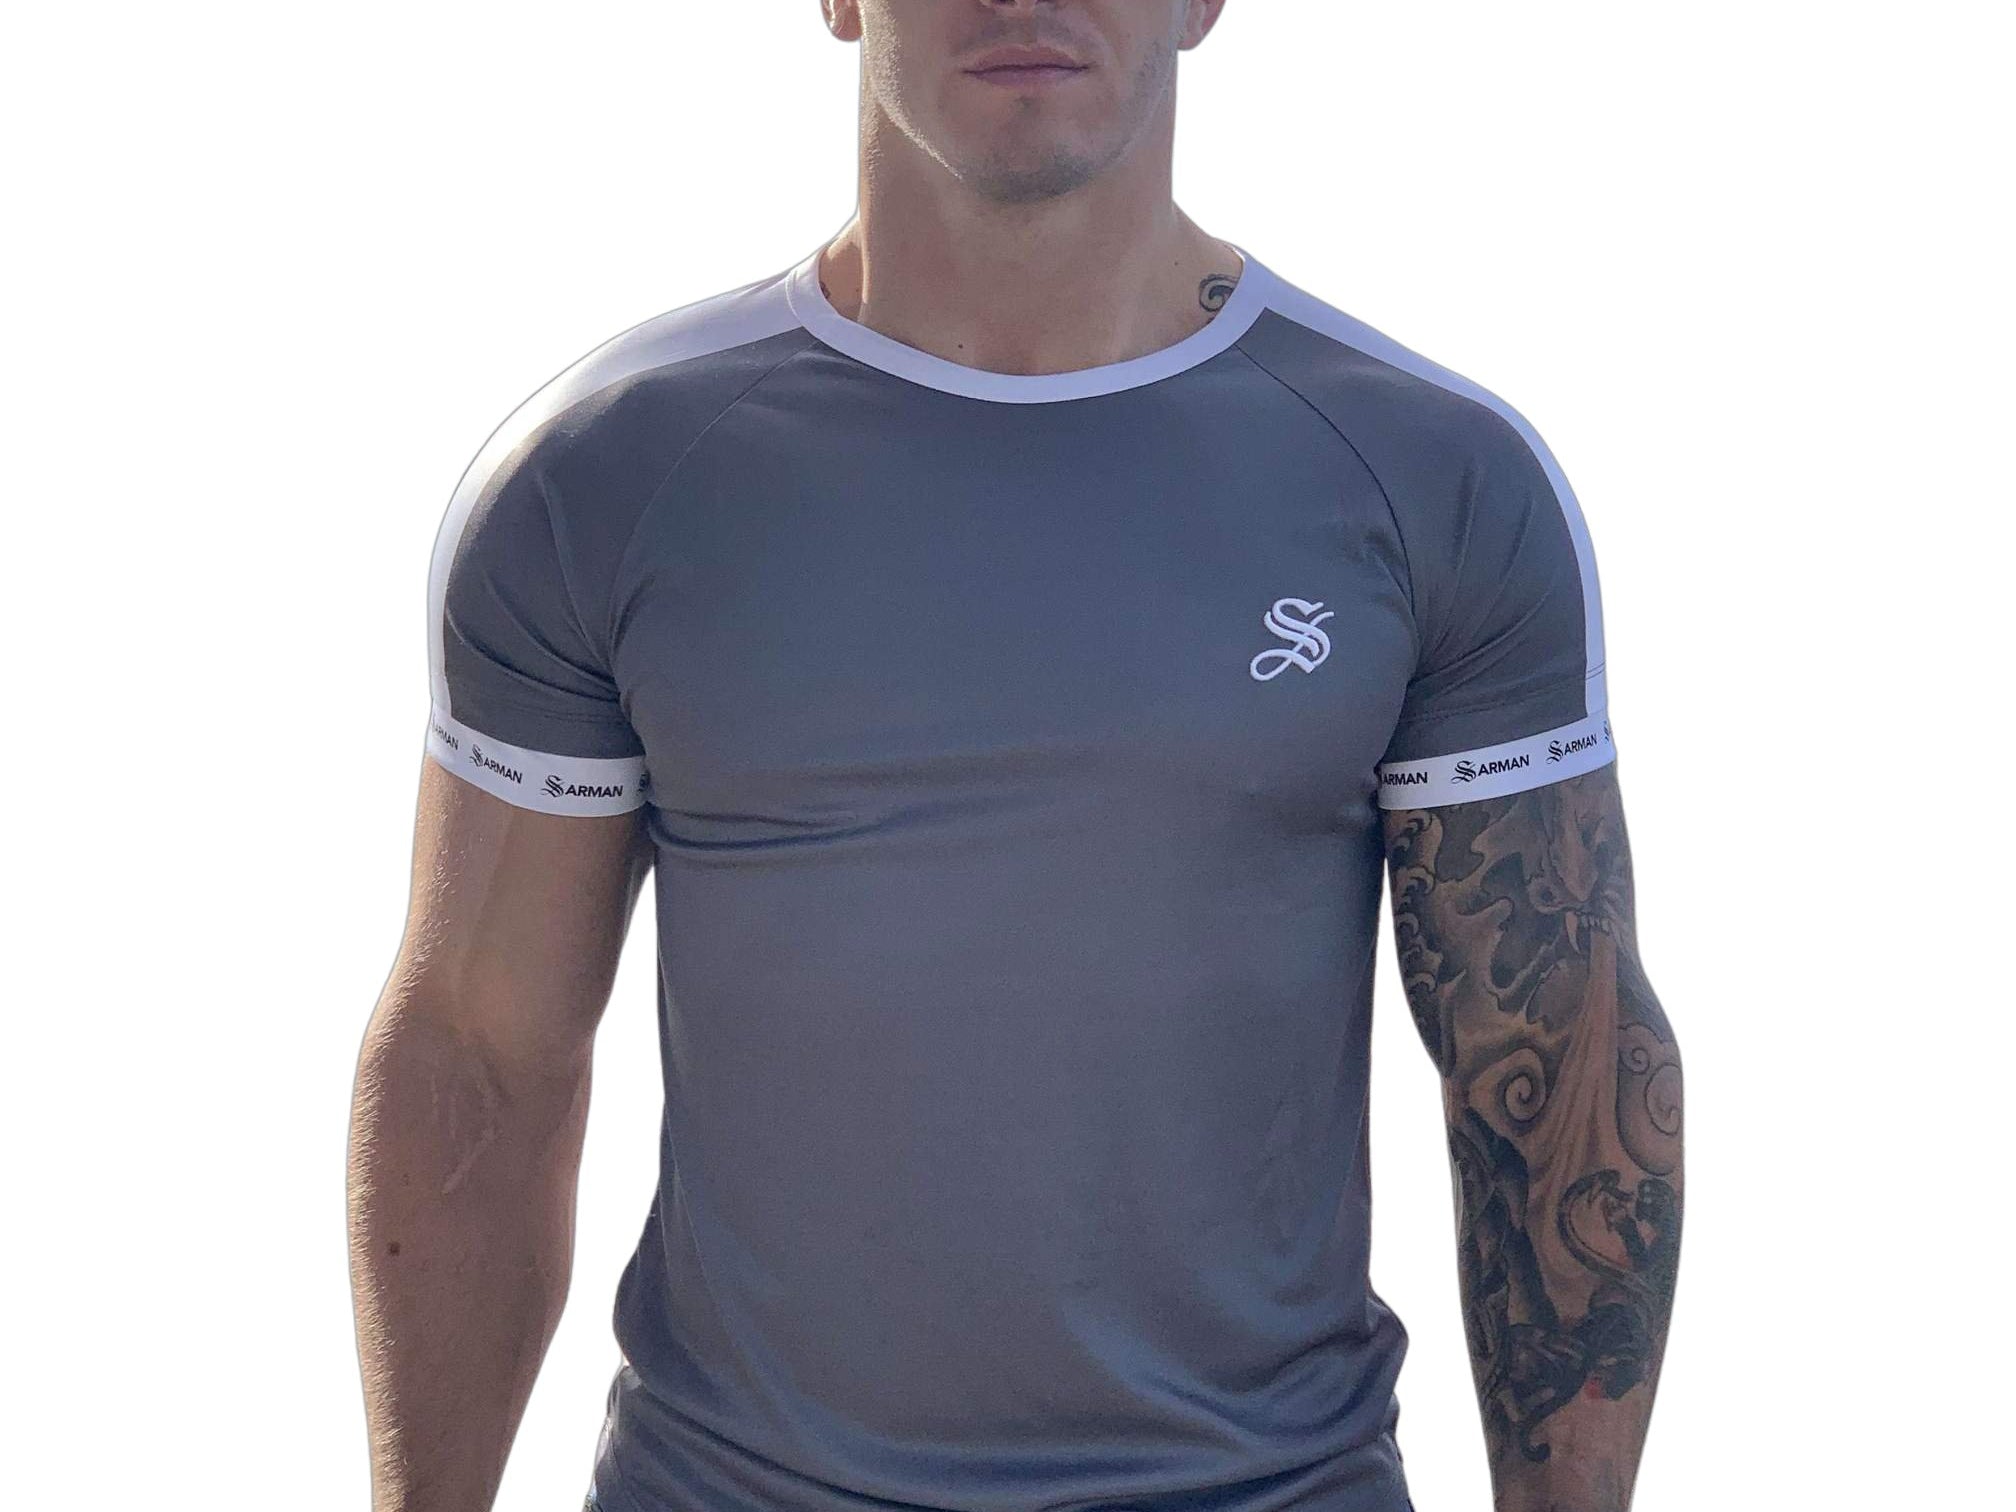 Cyberdyne - Silver T-shirt for Men - Sarman Fashion - Wholesale Clothing Fashion Brand for Men from Canada